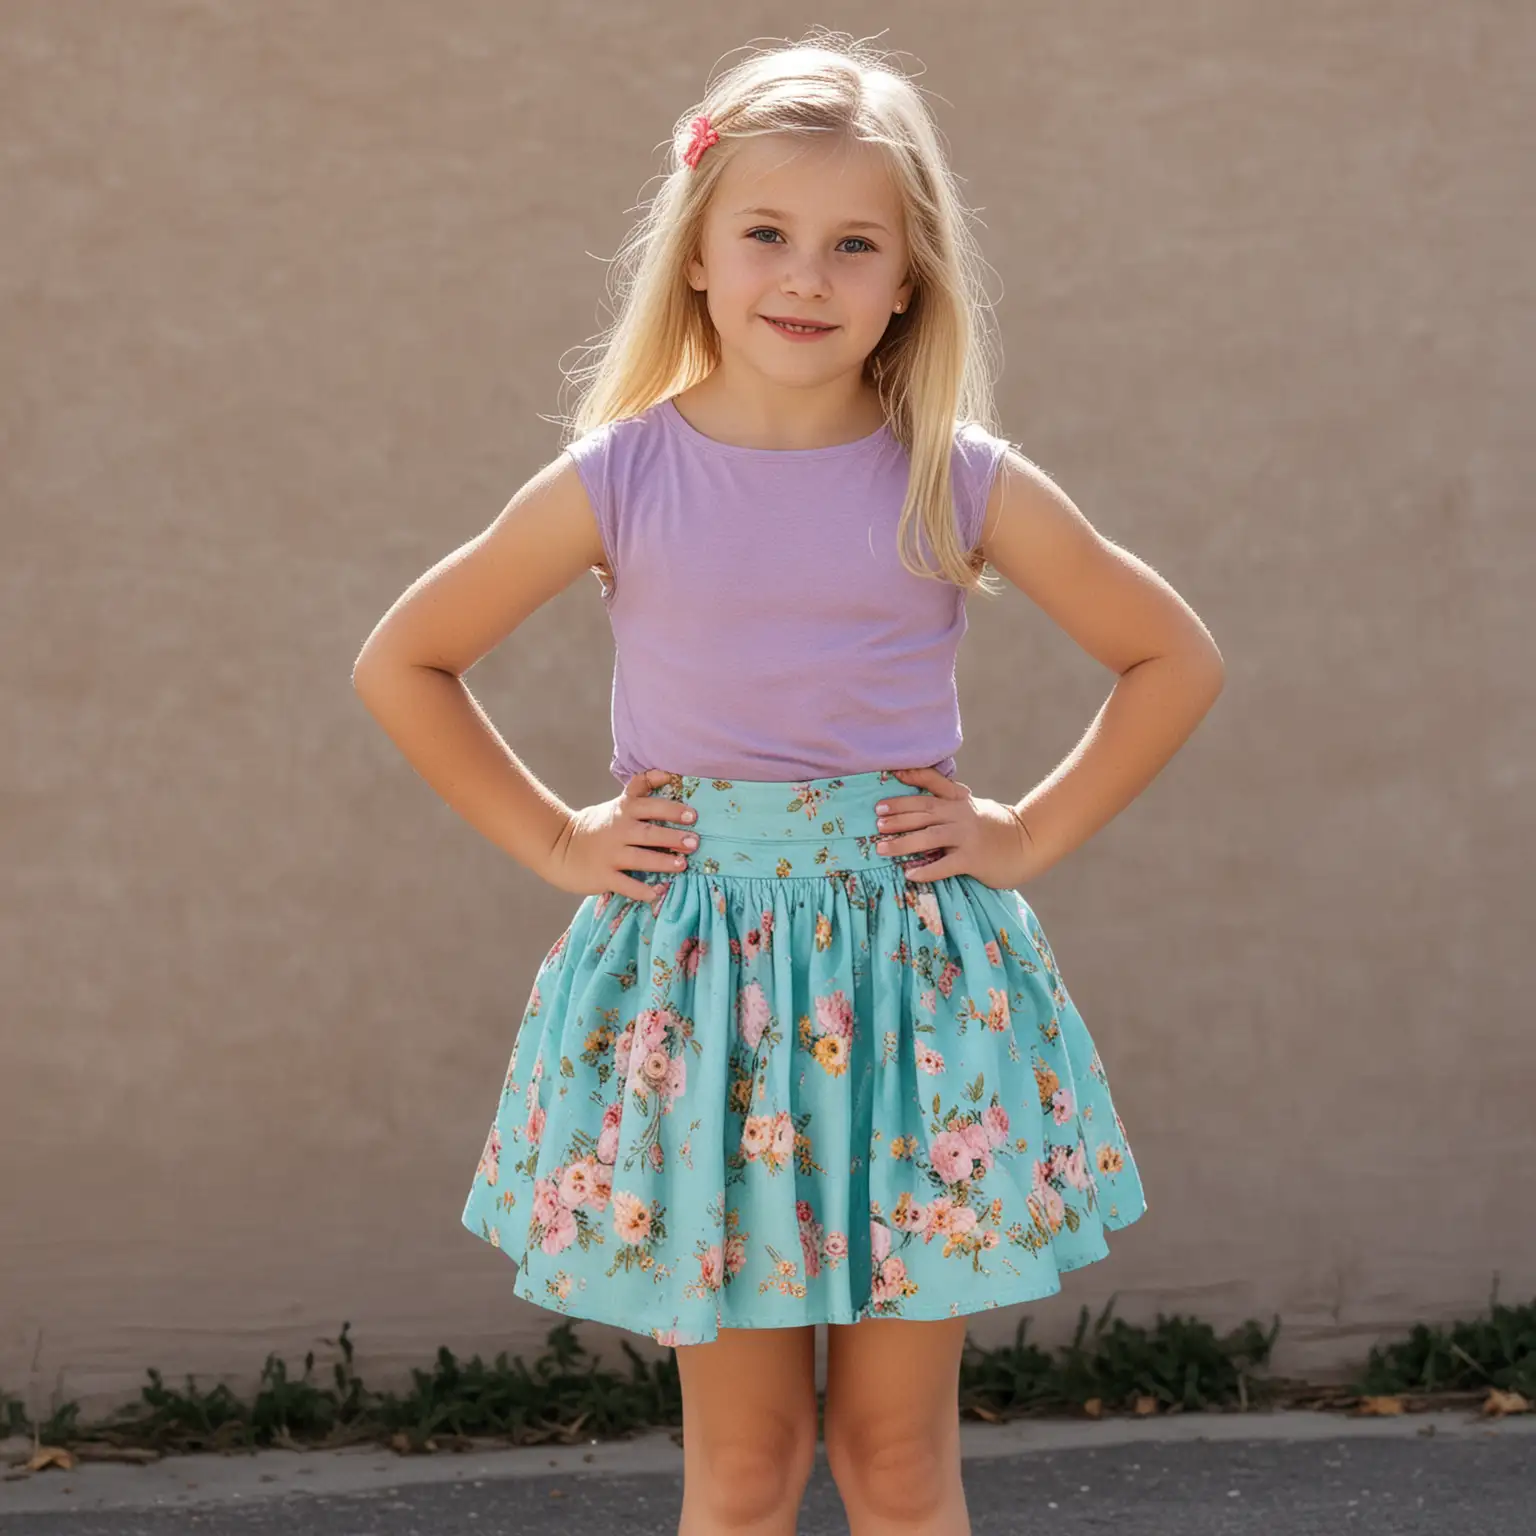 10 year old little blonde girl in skirt